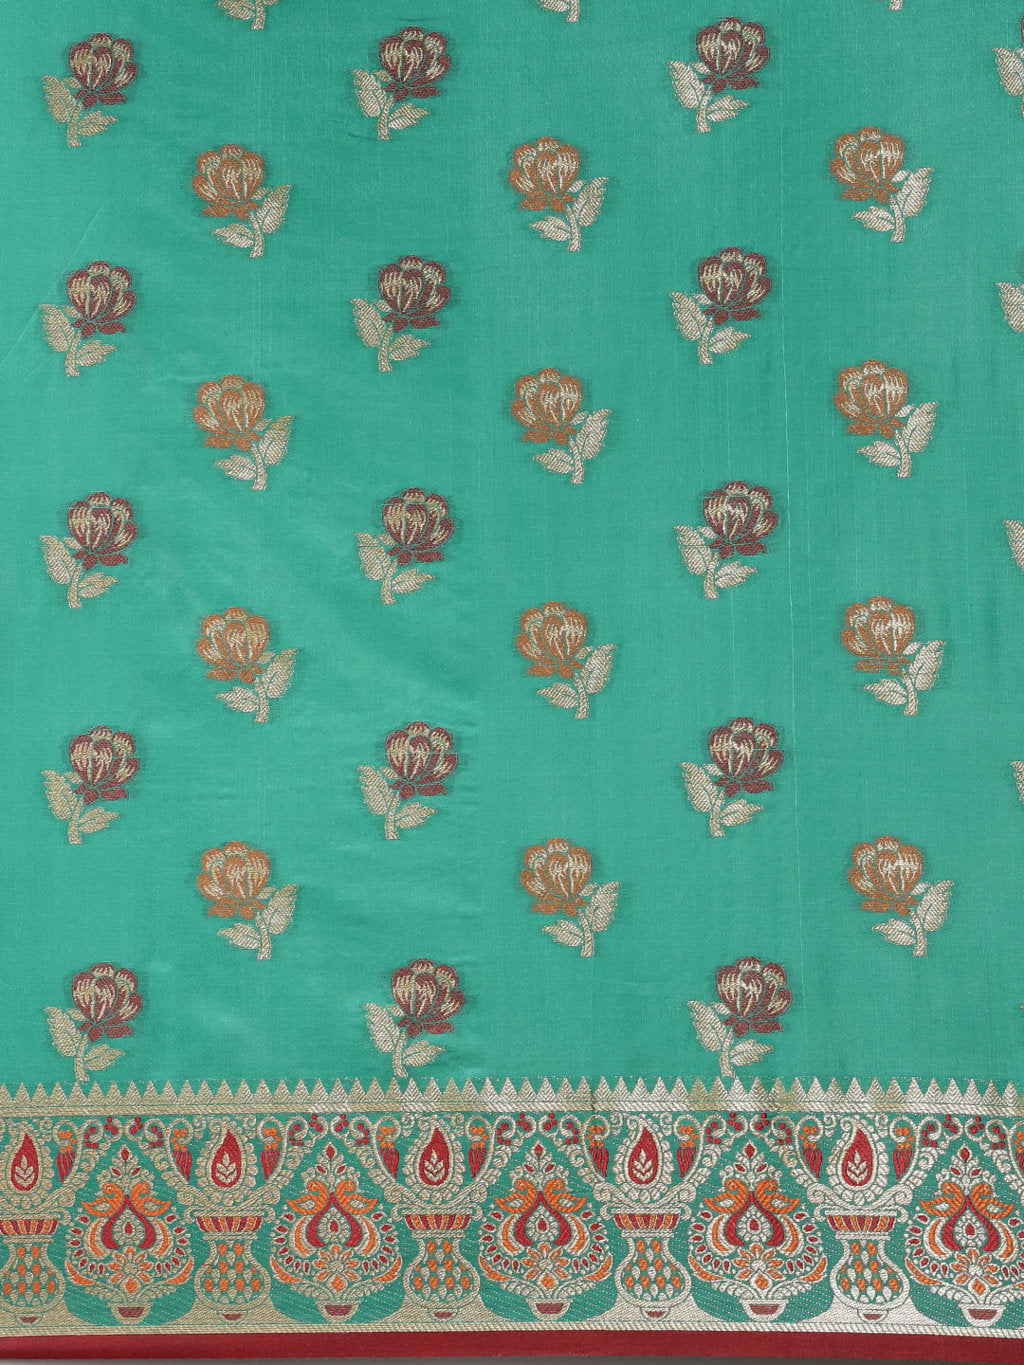 Women's Green Heavy Banarasi Silk Woven Work Traditional Saree - Sangam Prints